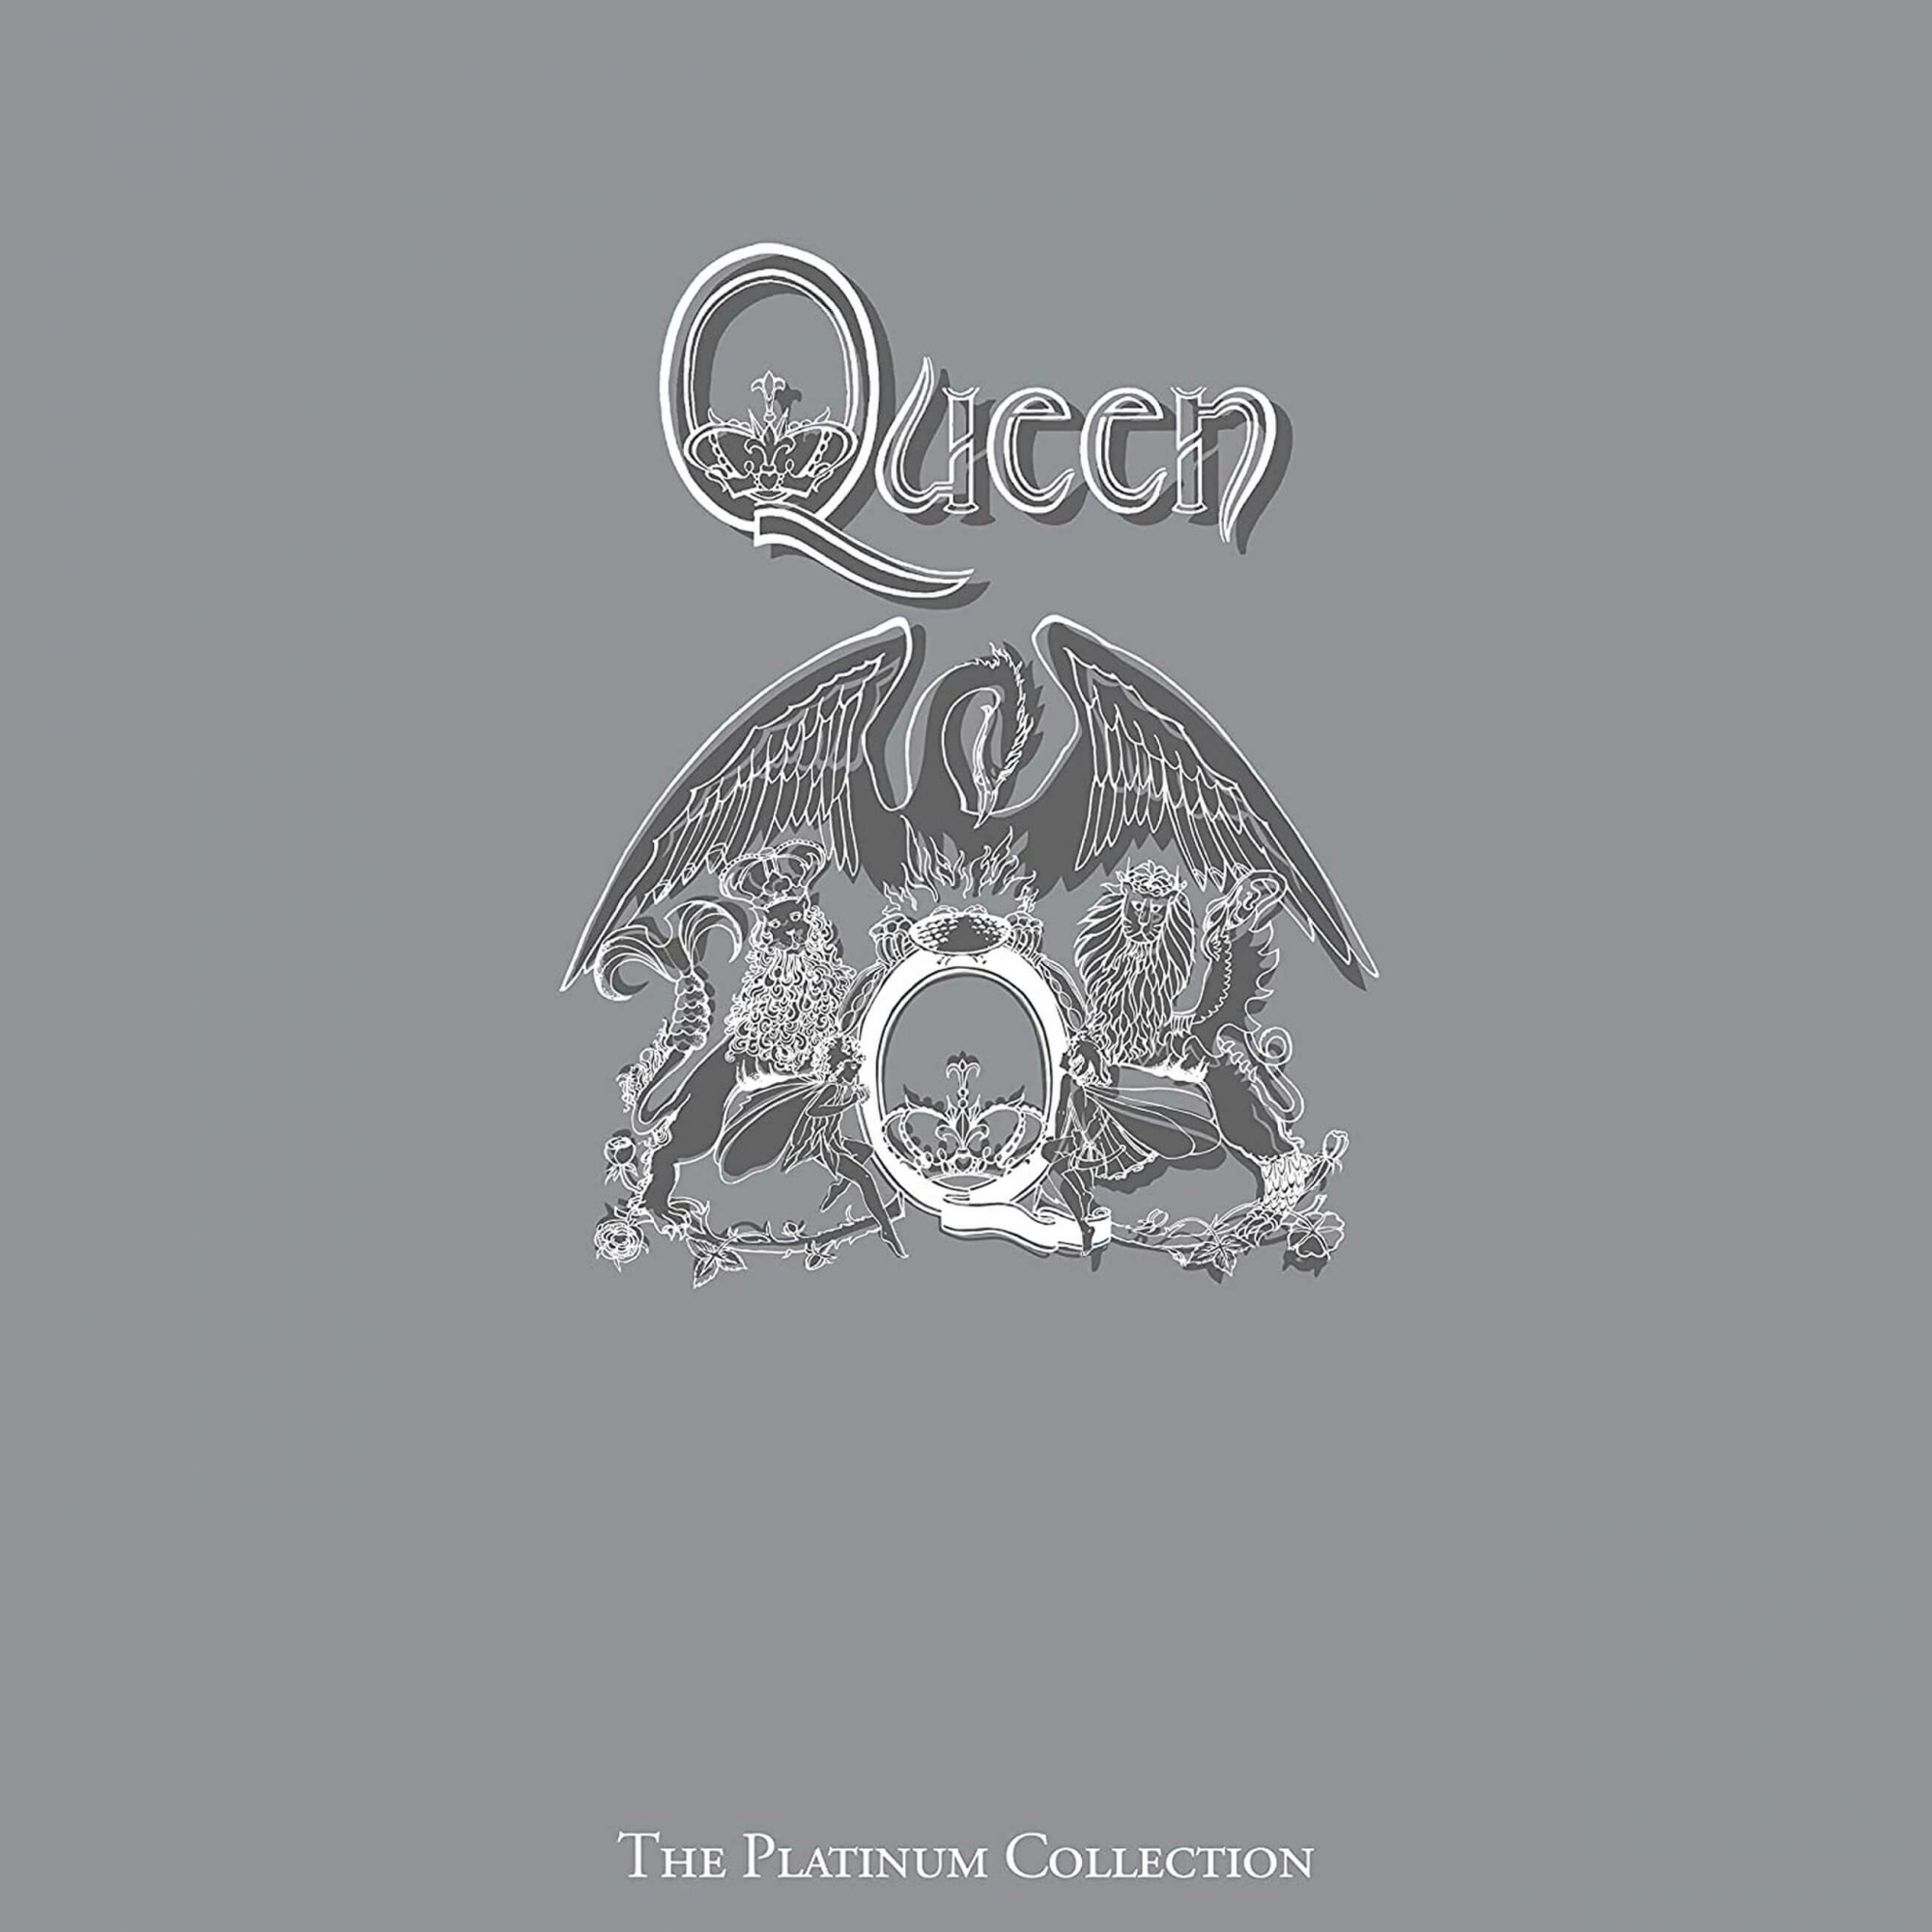 Queen The Platinum Collection 6 LP BOX SET cover